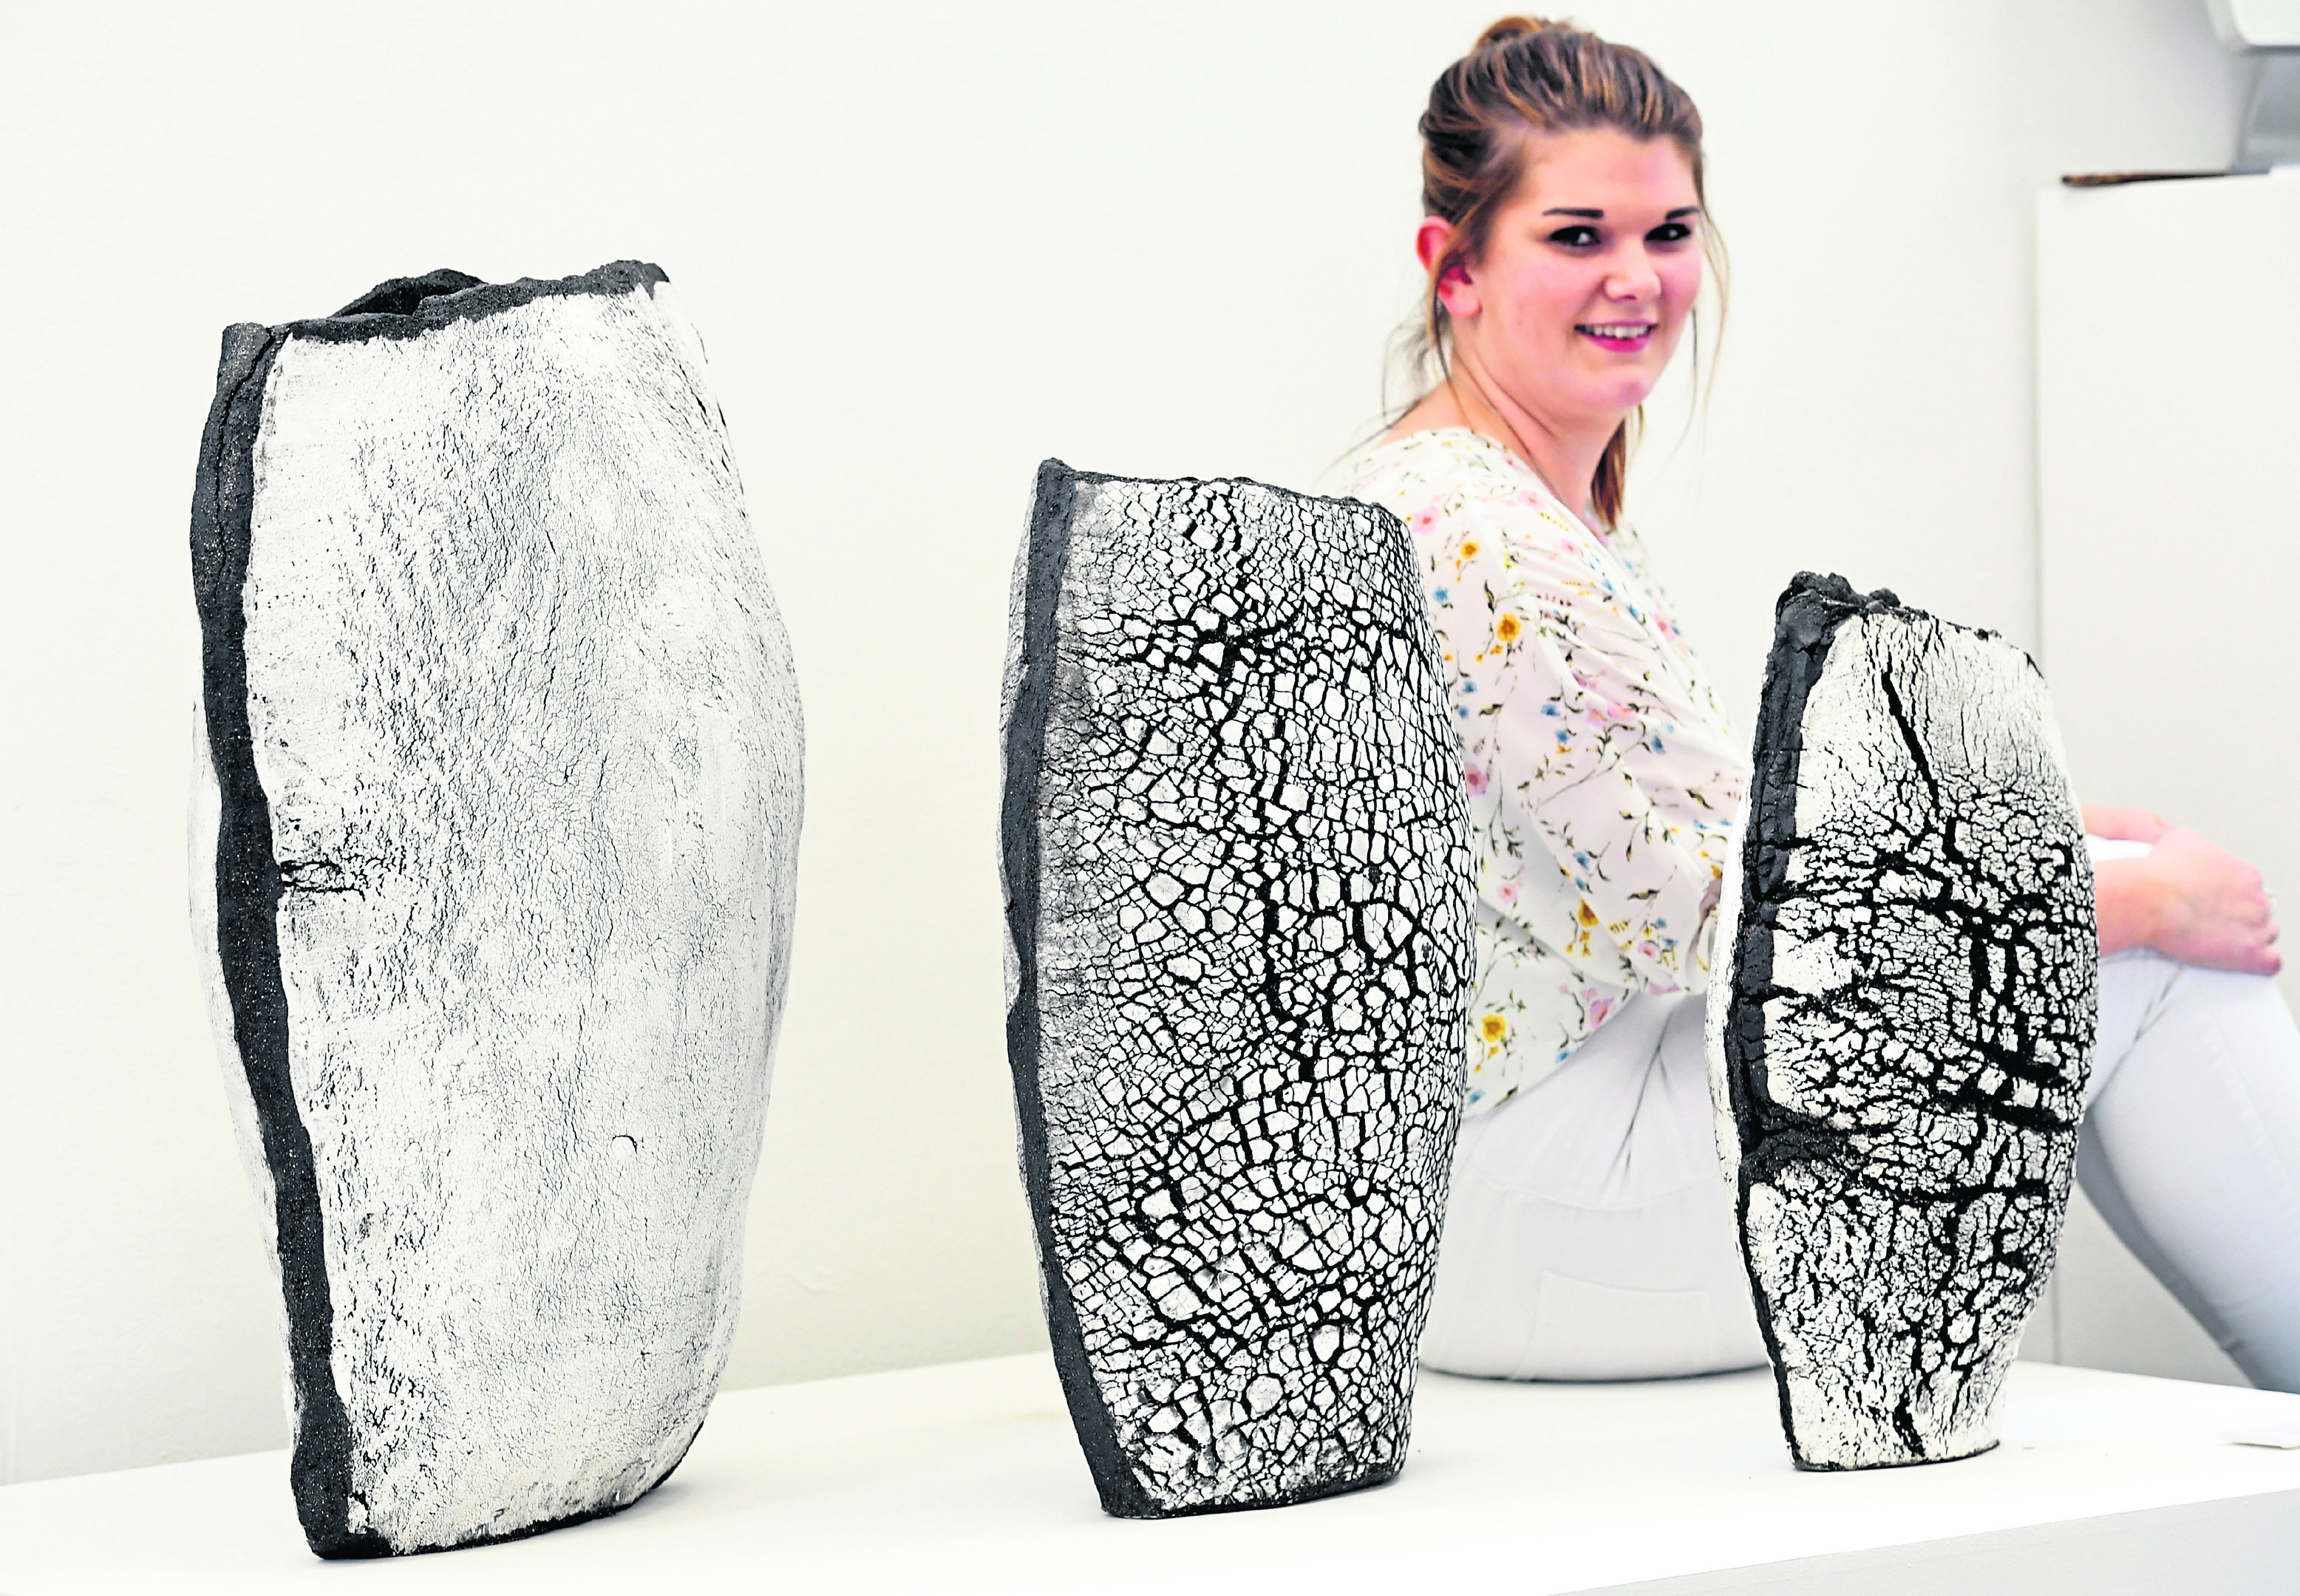 BP Design Award winner Anna Younie with her ceramics.